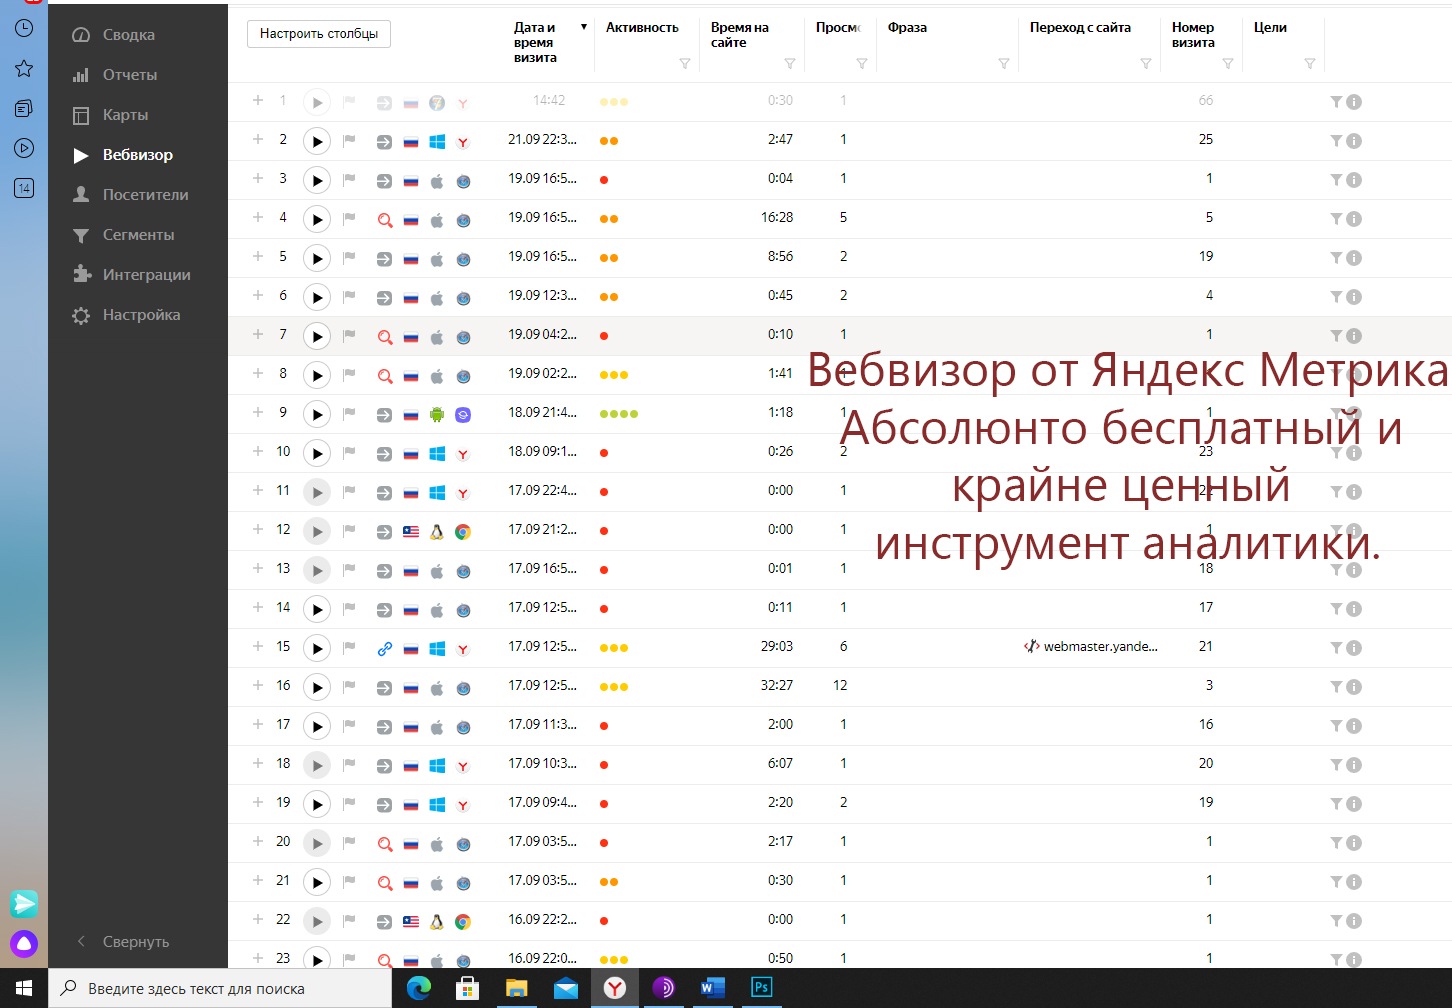 Подключите и используйте вебвизор в Яндекс Метрике